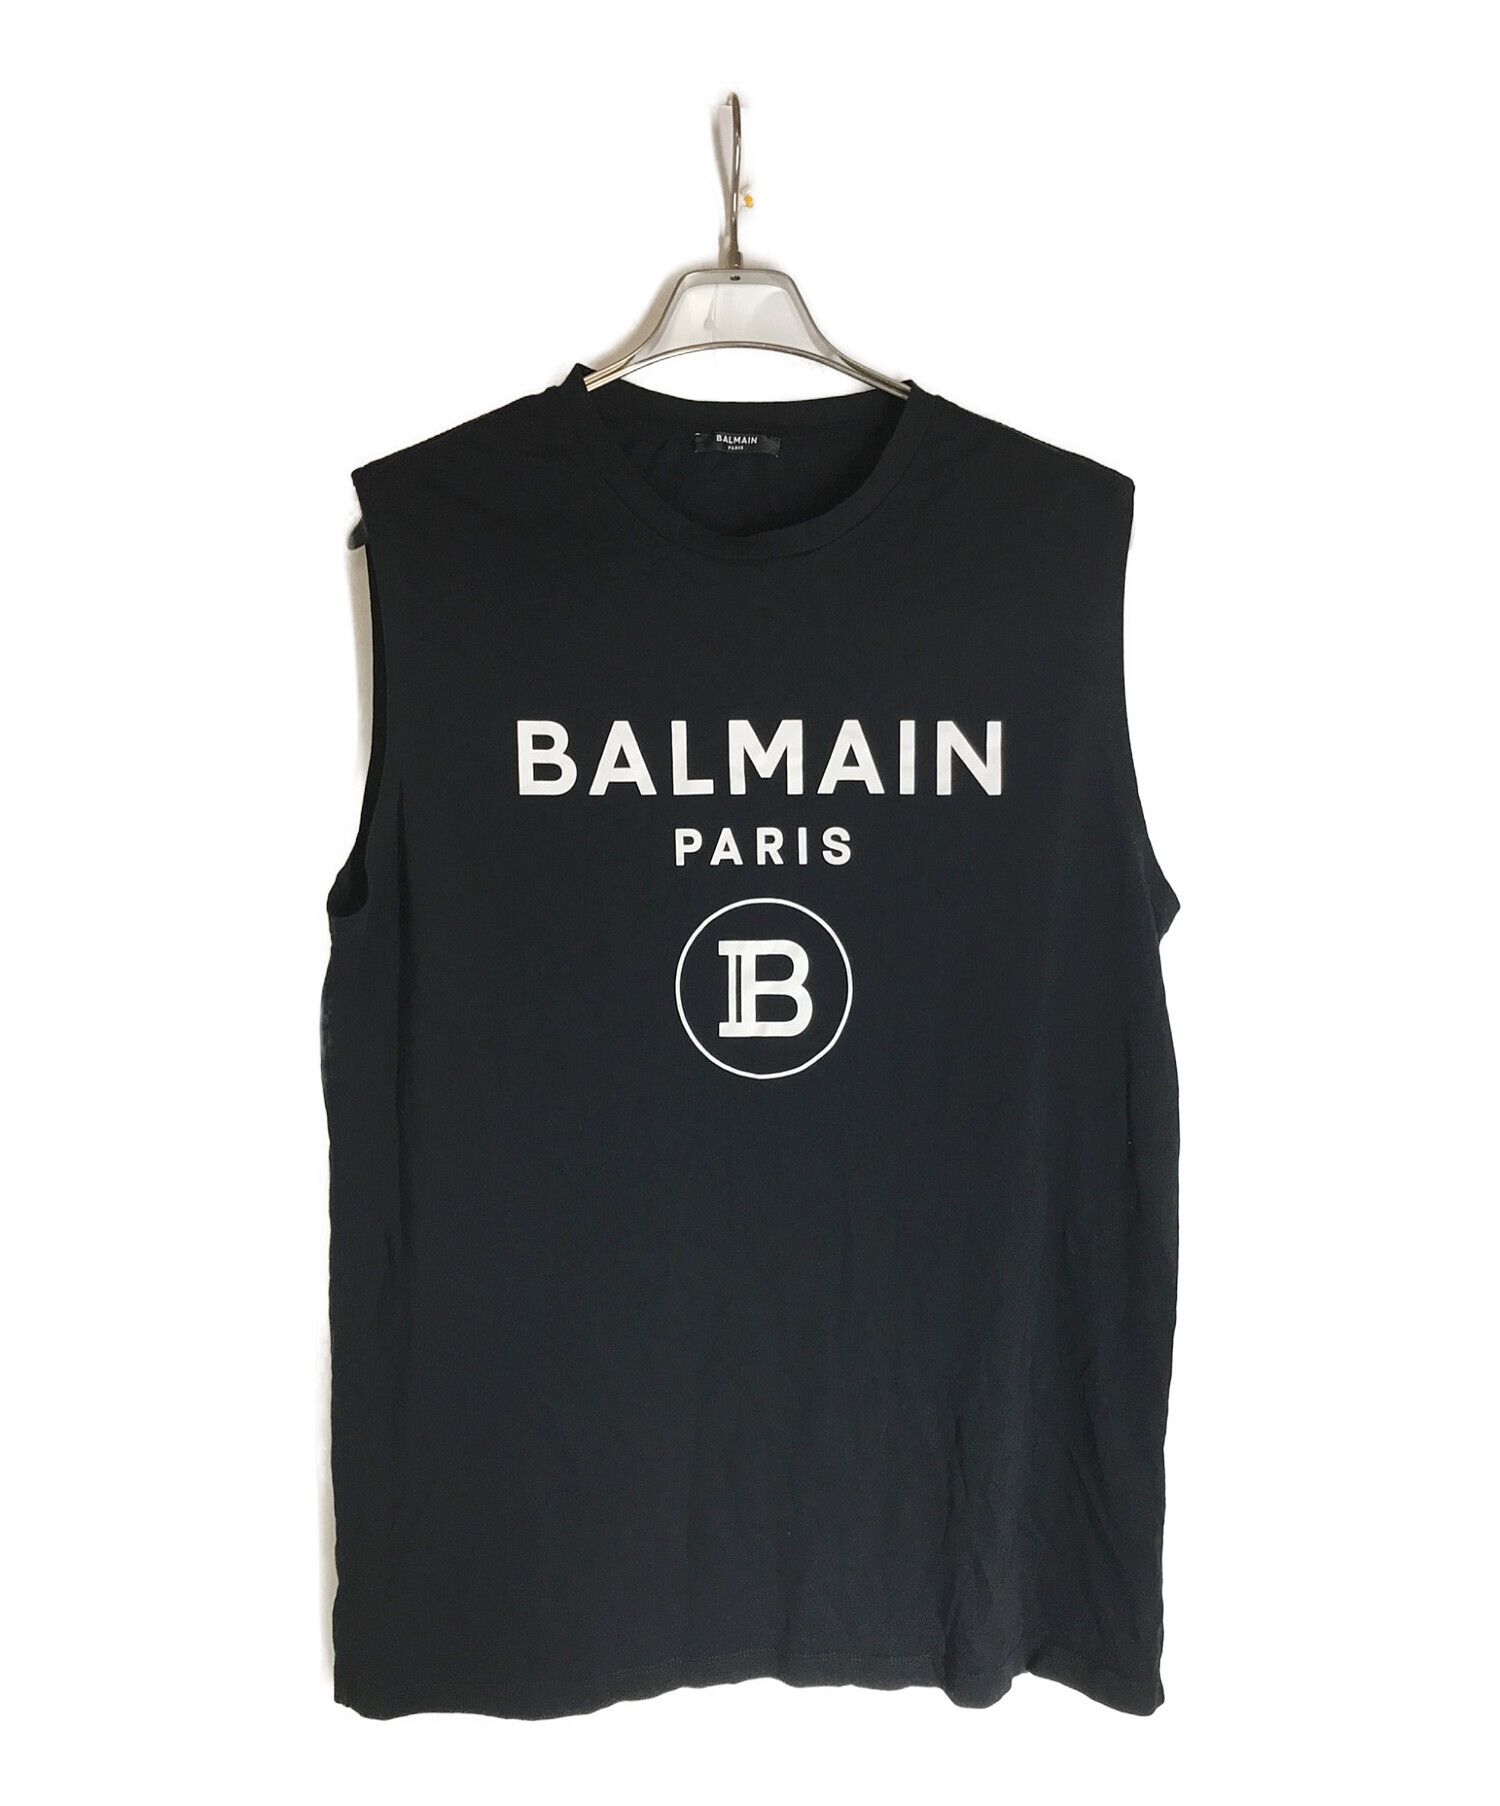 BALMAIN バルマン フロントプリント ノースリーブTシャツ カットソー ブラック495センチ肩幅